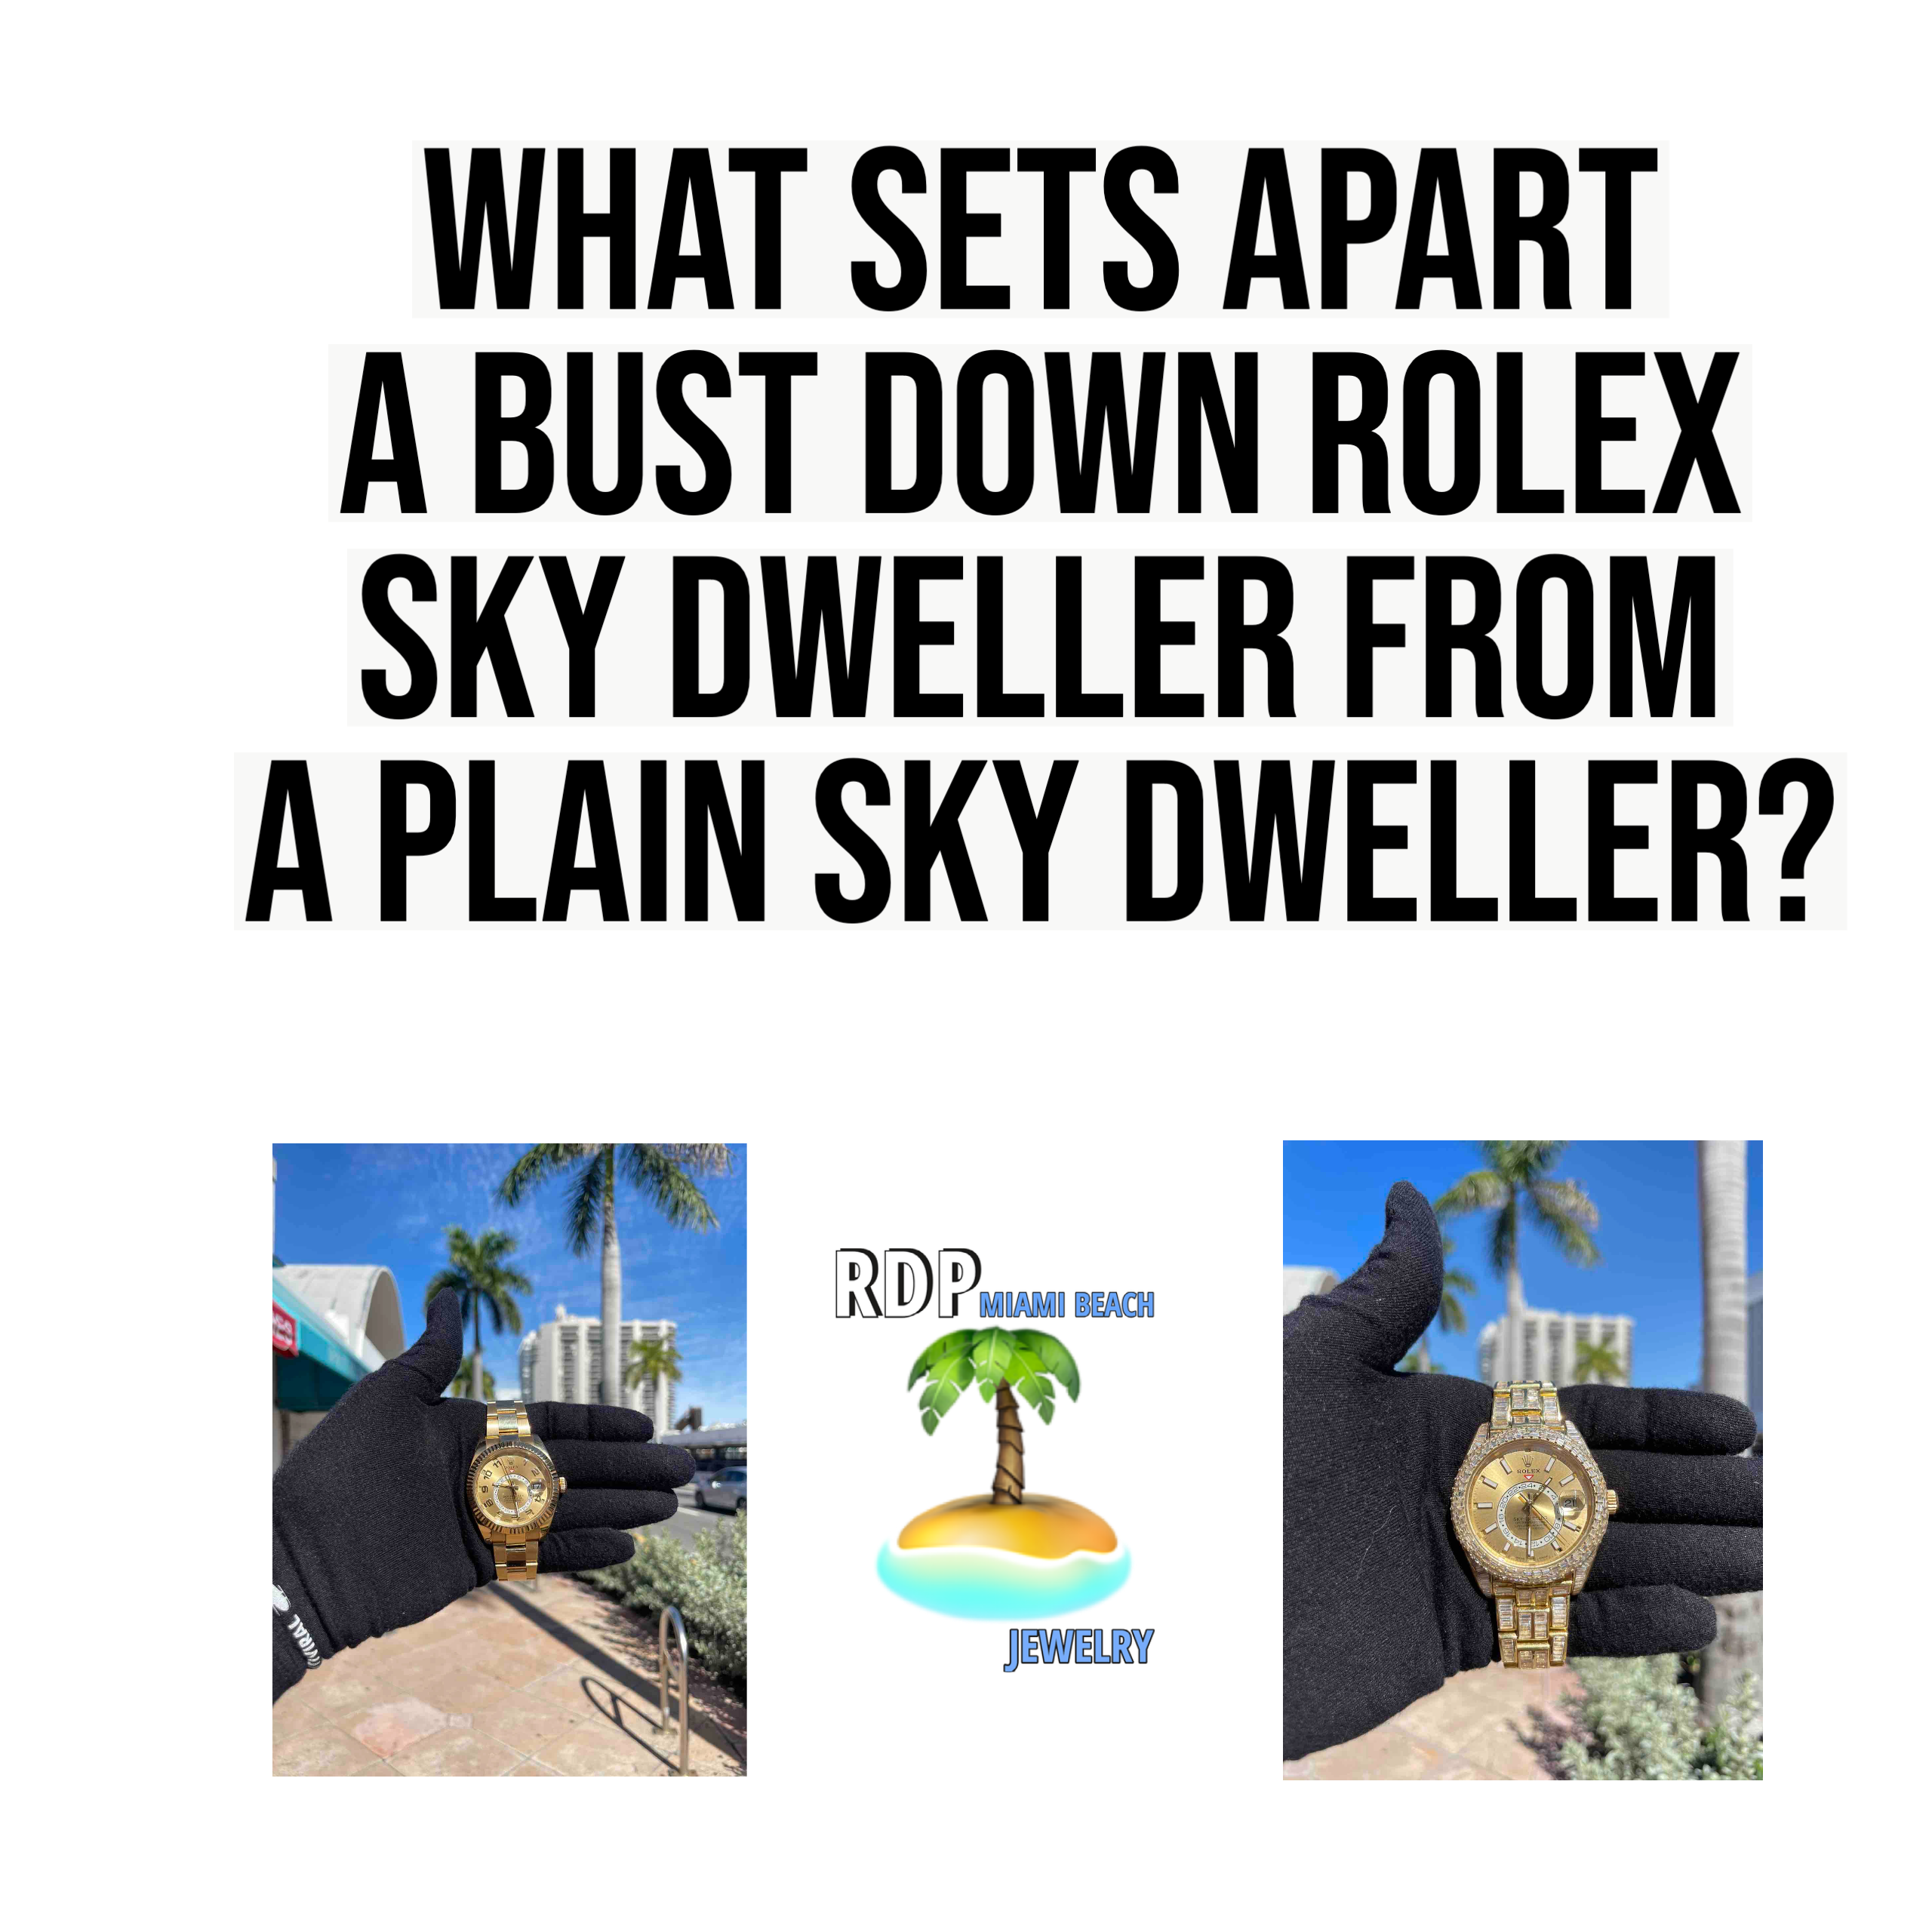 "sky dweller rolex bust down" What sets apart a Bust Down Rolex Sky Dweller from a Plain Sky Dweller?